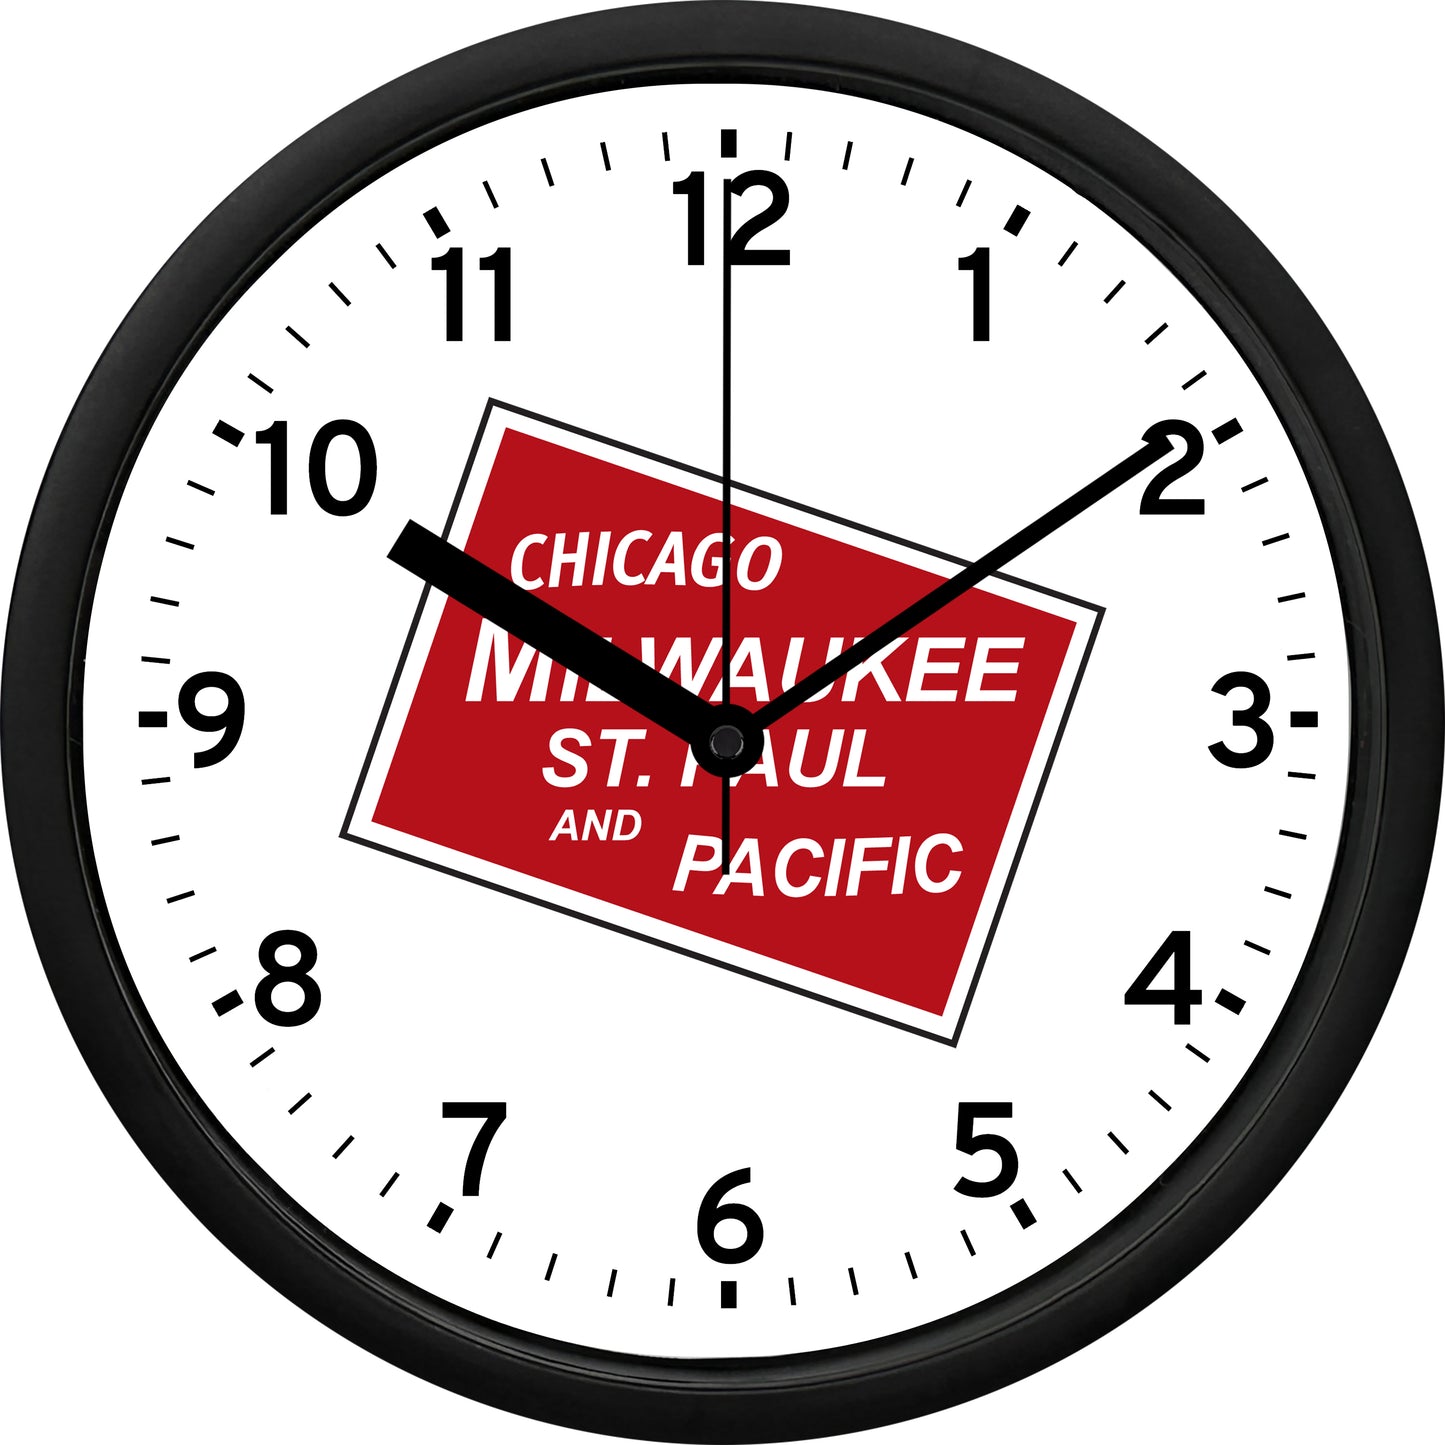 Chicago, Milwaukee, St. Paul & Pacific Railroad "The Milwaukee Road" Wall Clock